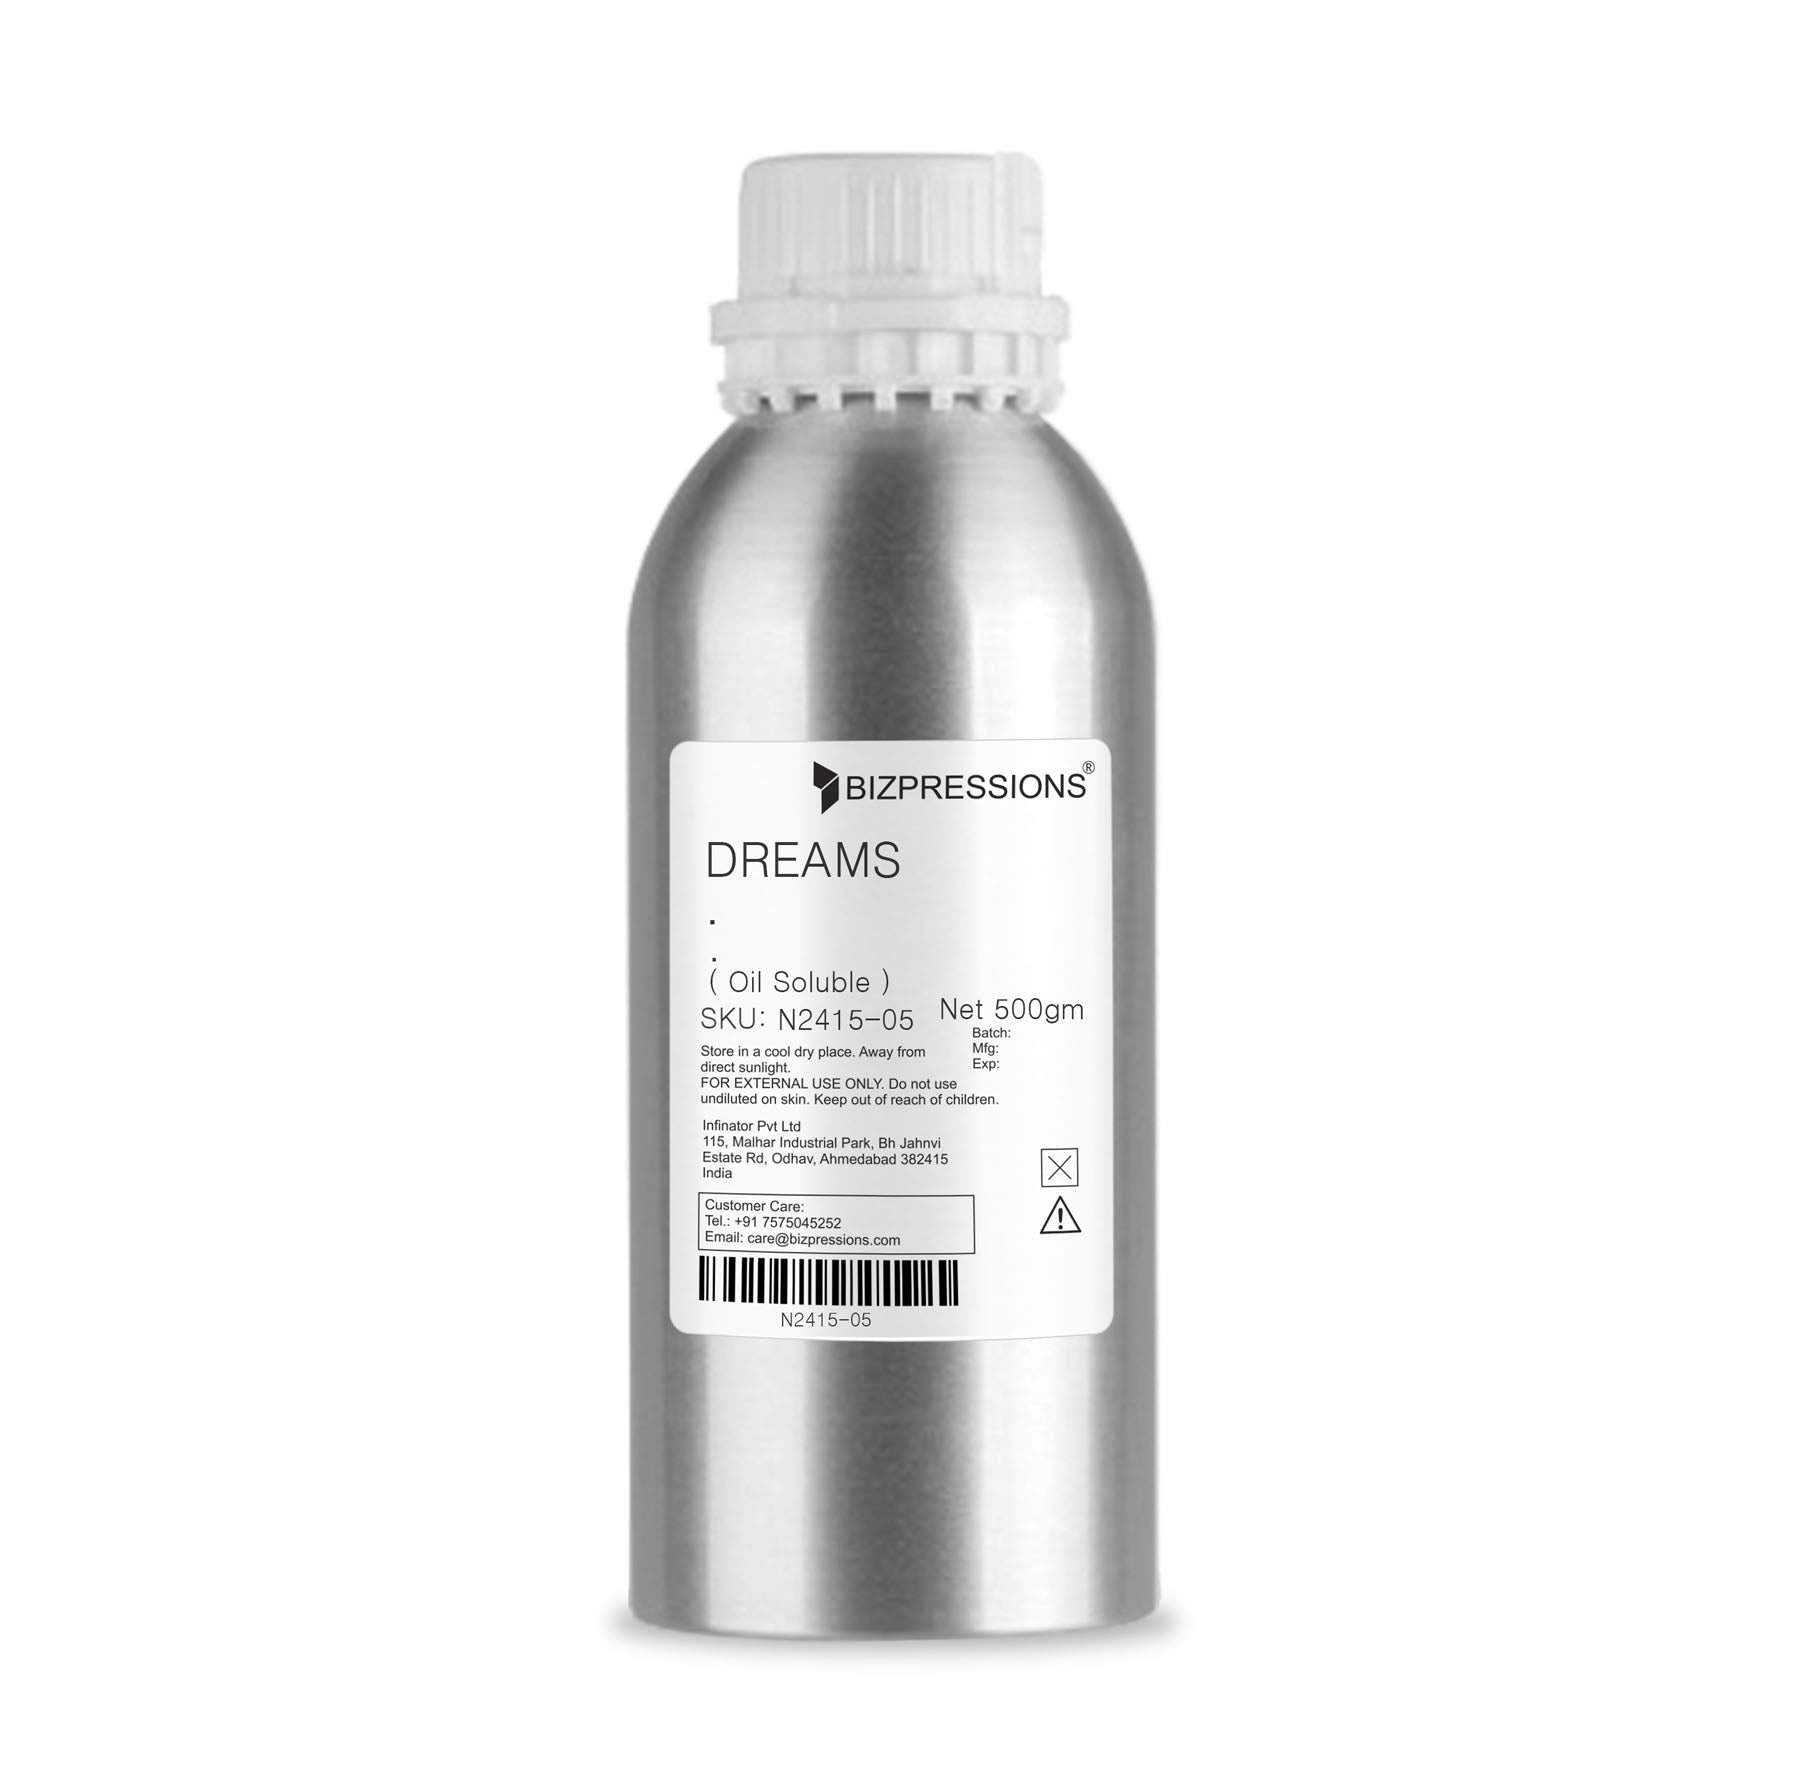 DREAMS - Fragrance ( Oil Soluble ) - 500 gm